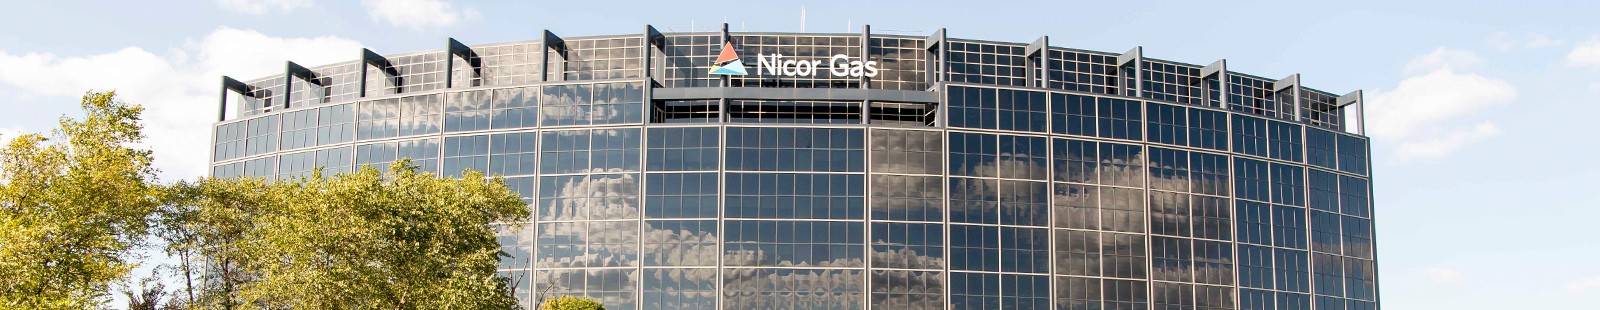 Nicor Gas building